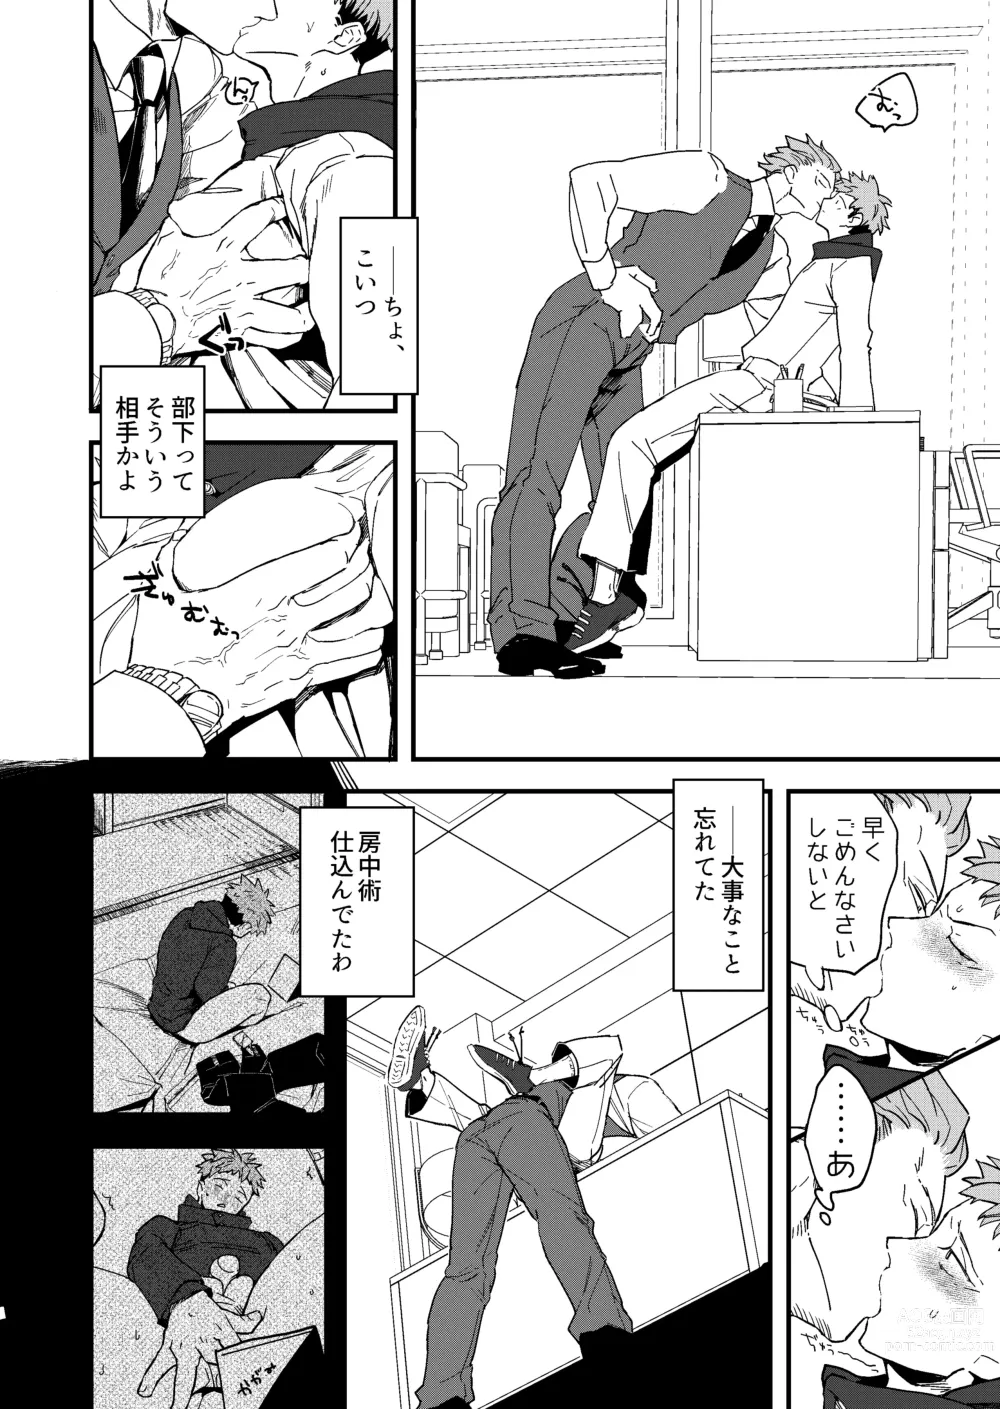 Page 7 of doujinshi Kanzen haiboku